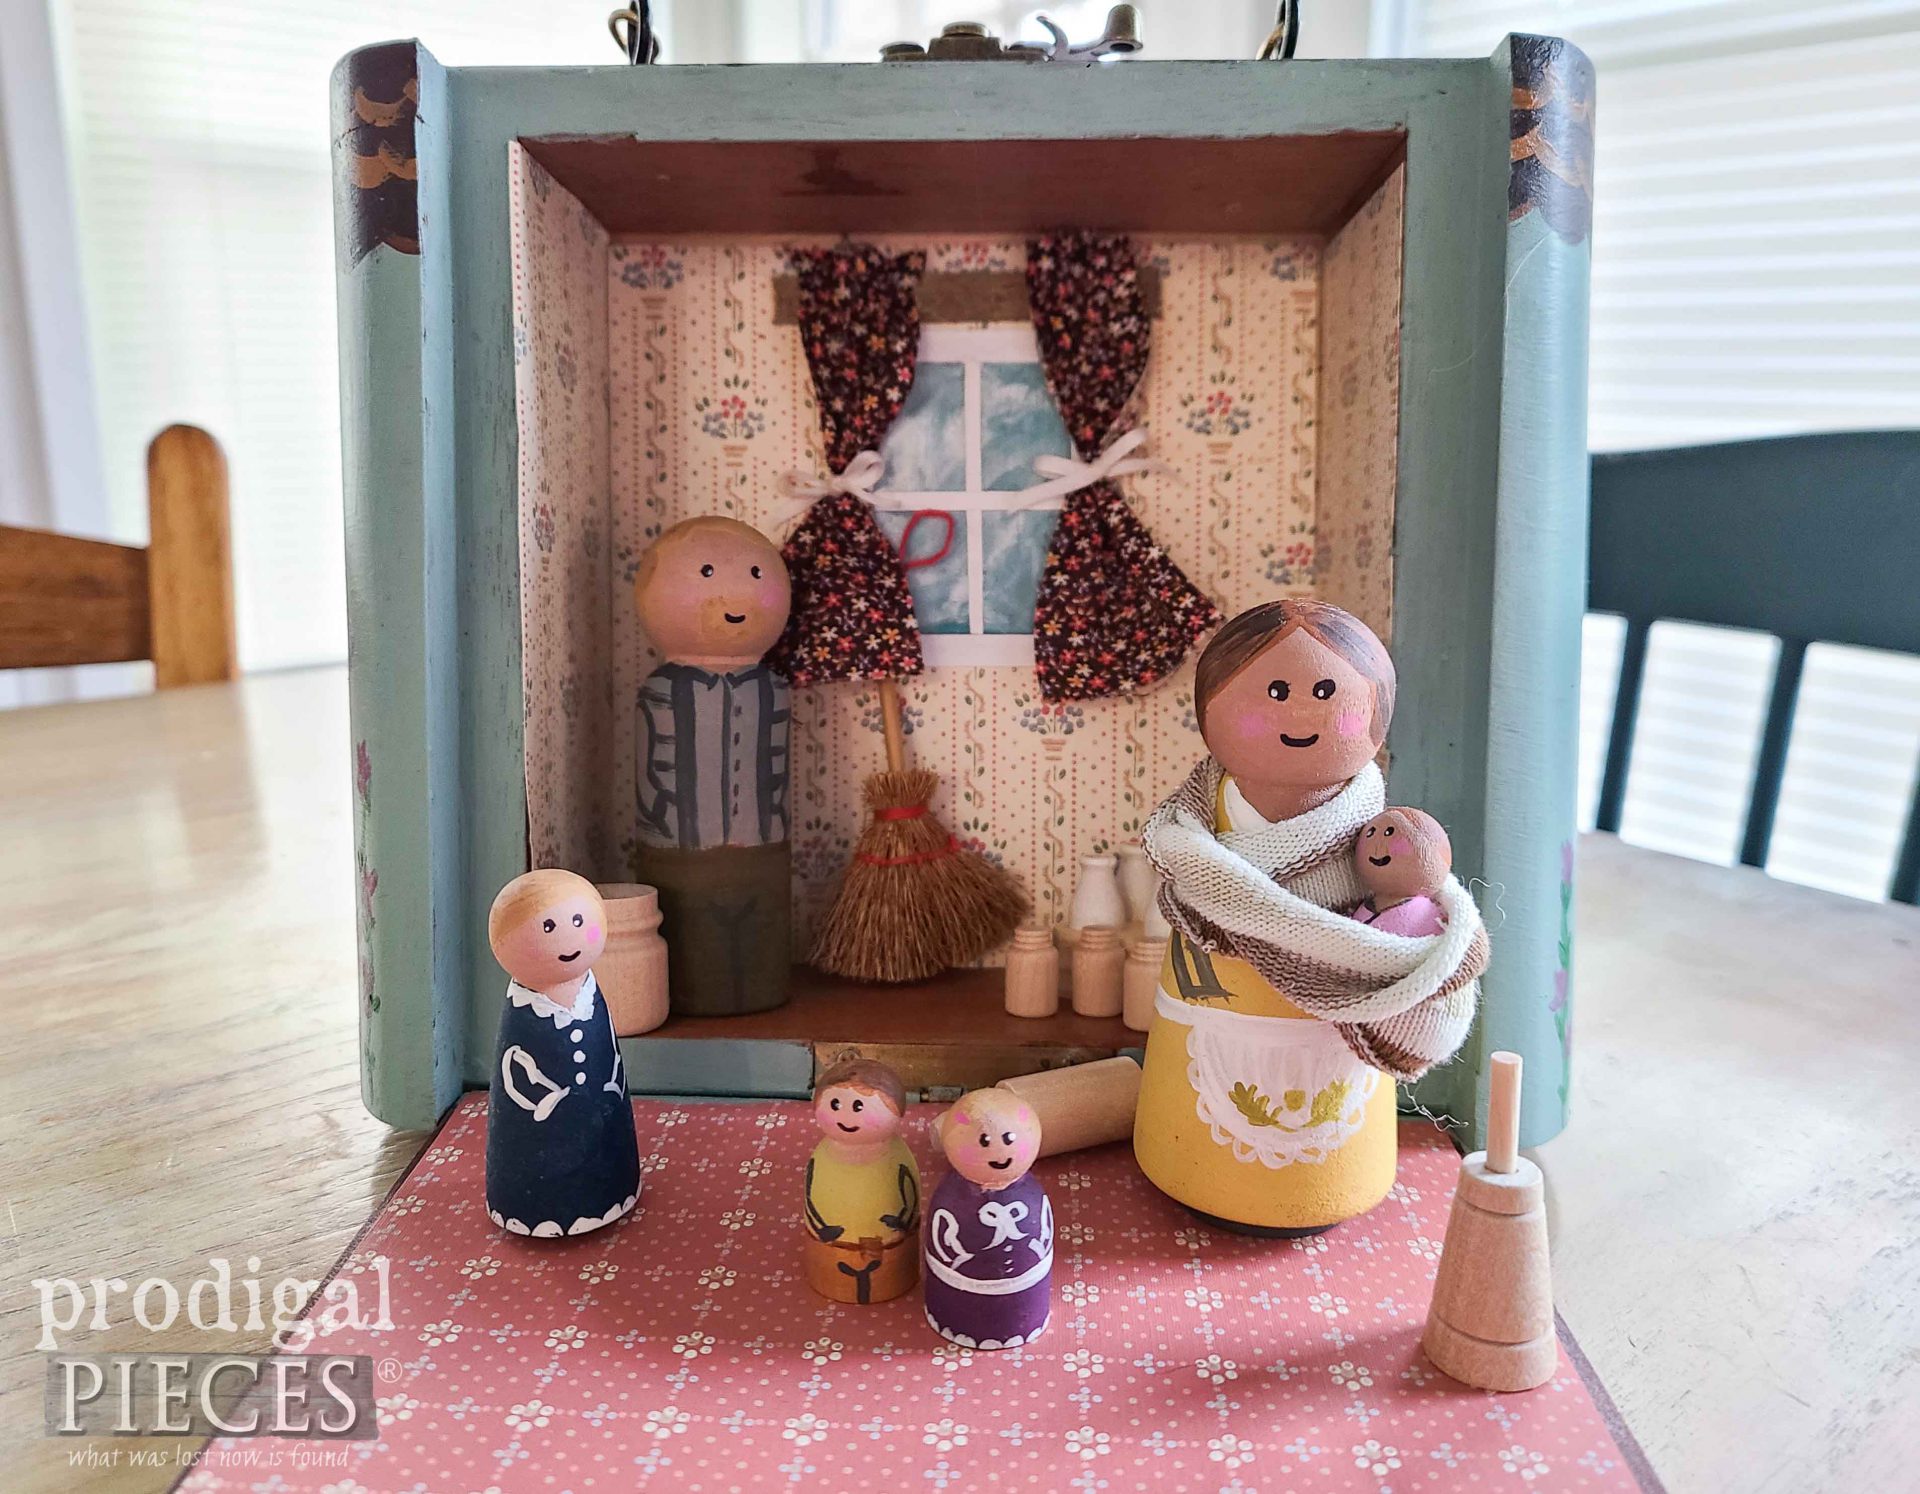 Handmade Peg Doll Family inside Upcycled Cigar Box Dollhouse by Larissa of Prodigal Pieces | prodigalpieces.com #prodigalpieces #dolls #toys #pretendplay